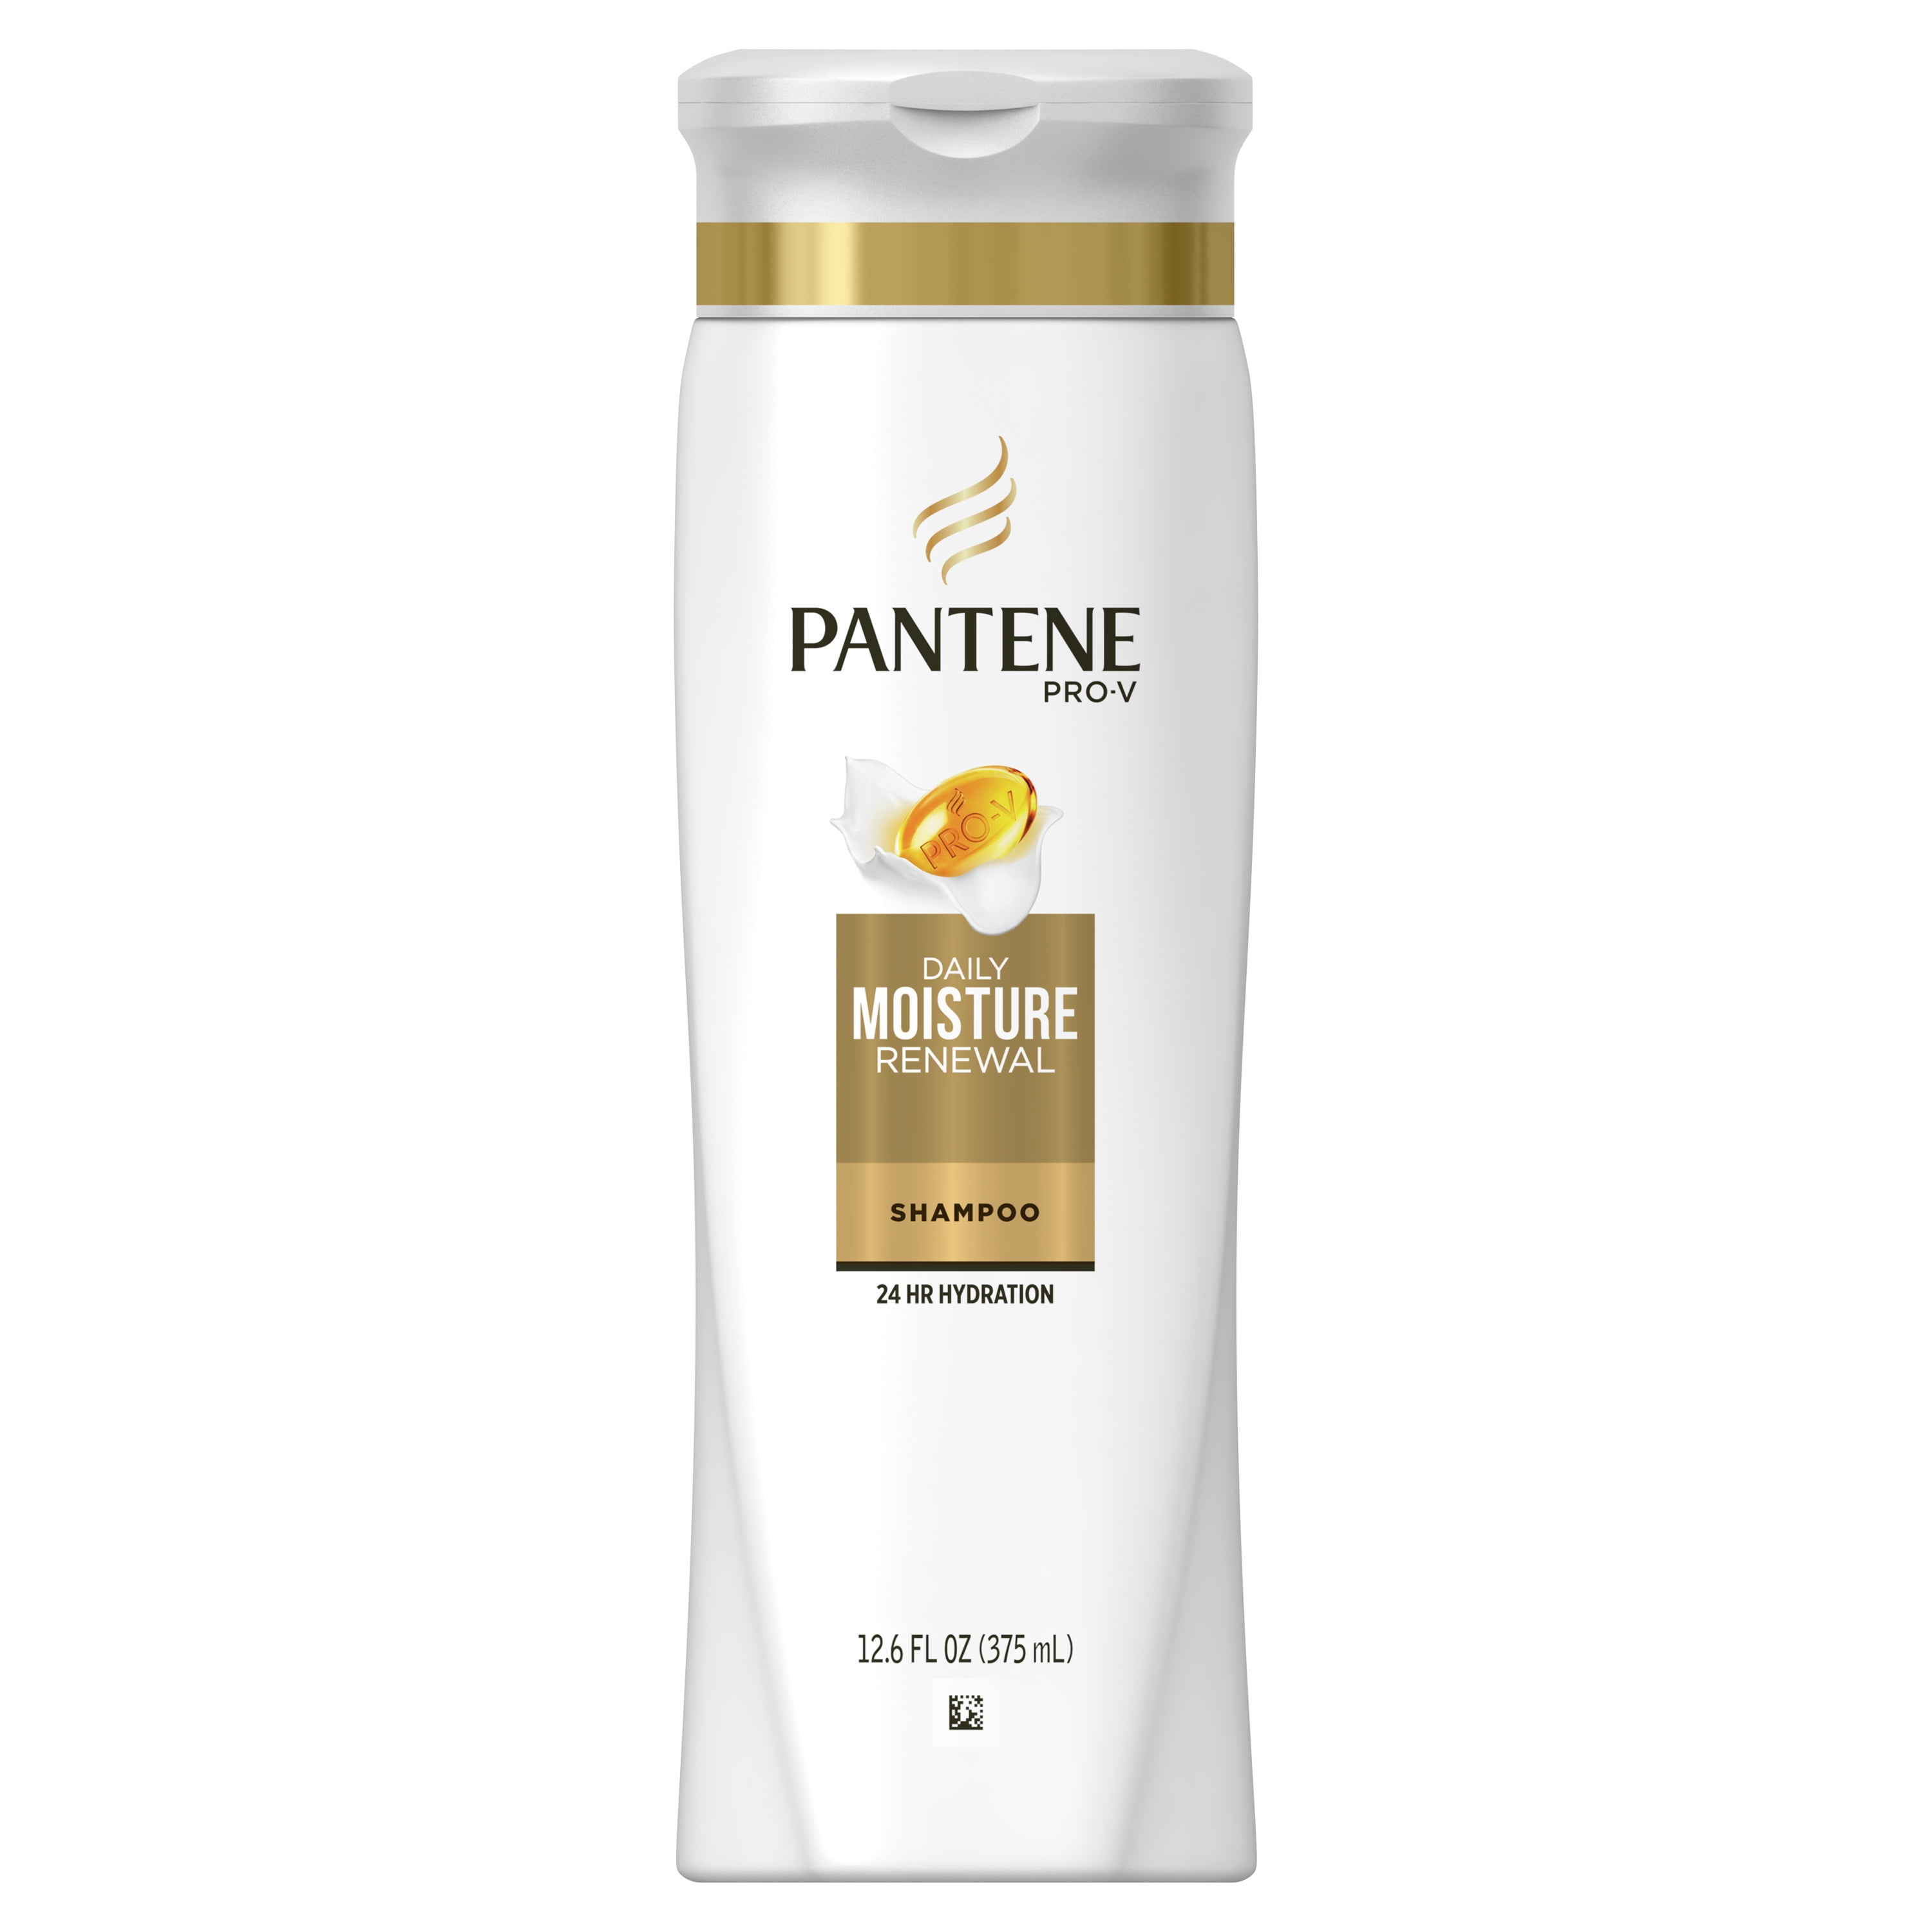 Pantene Pro-V Daily Moisture Renewal Shampoo, 12.6 fl oz